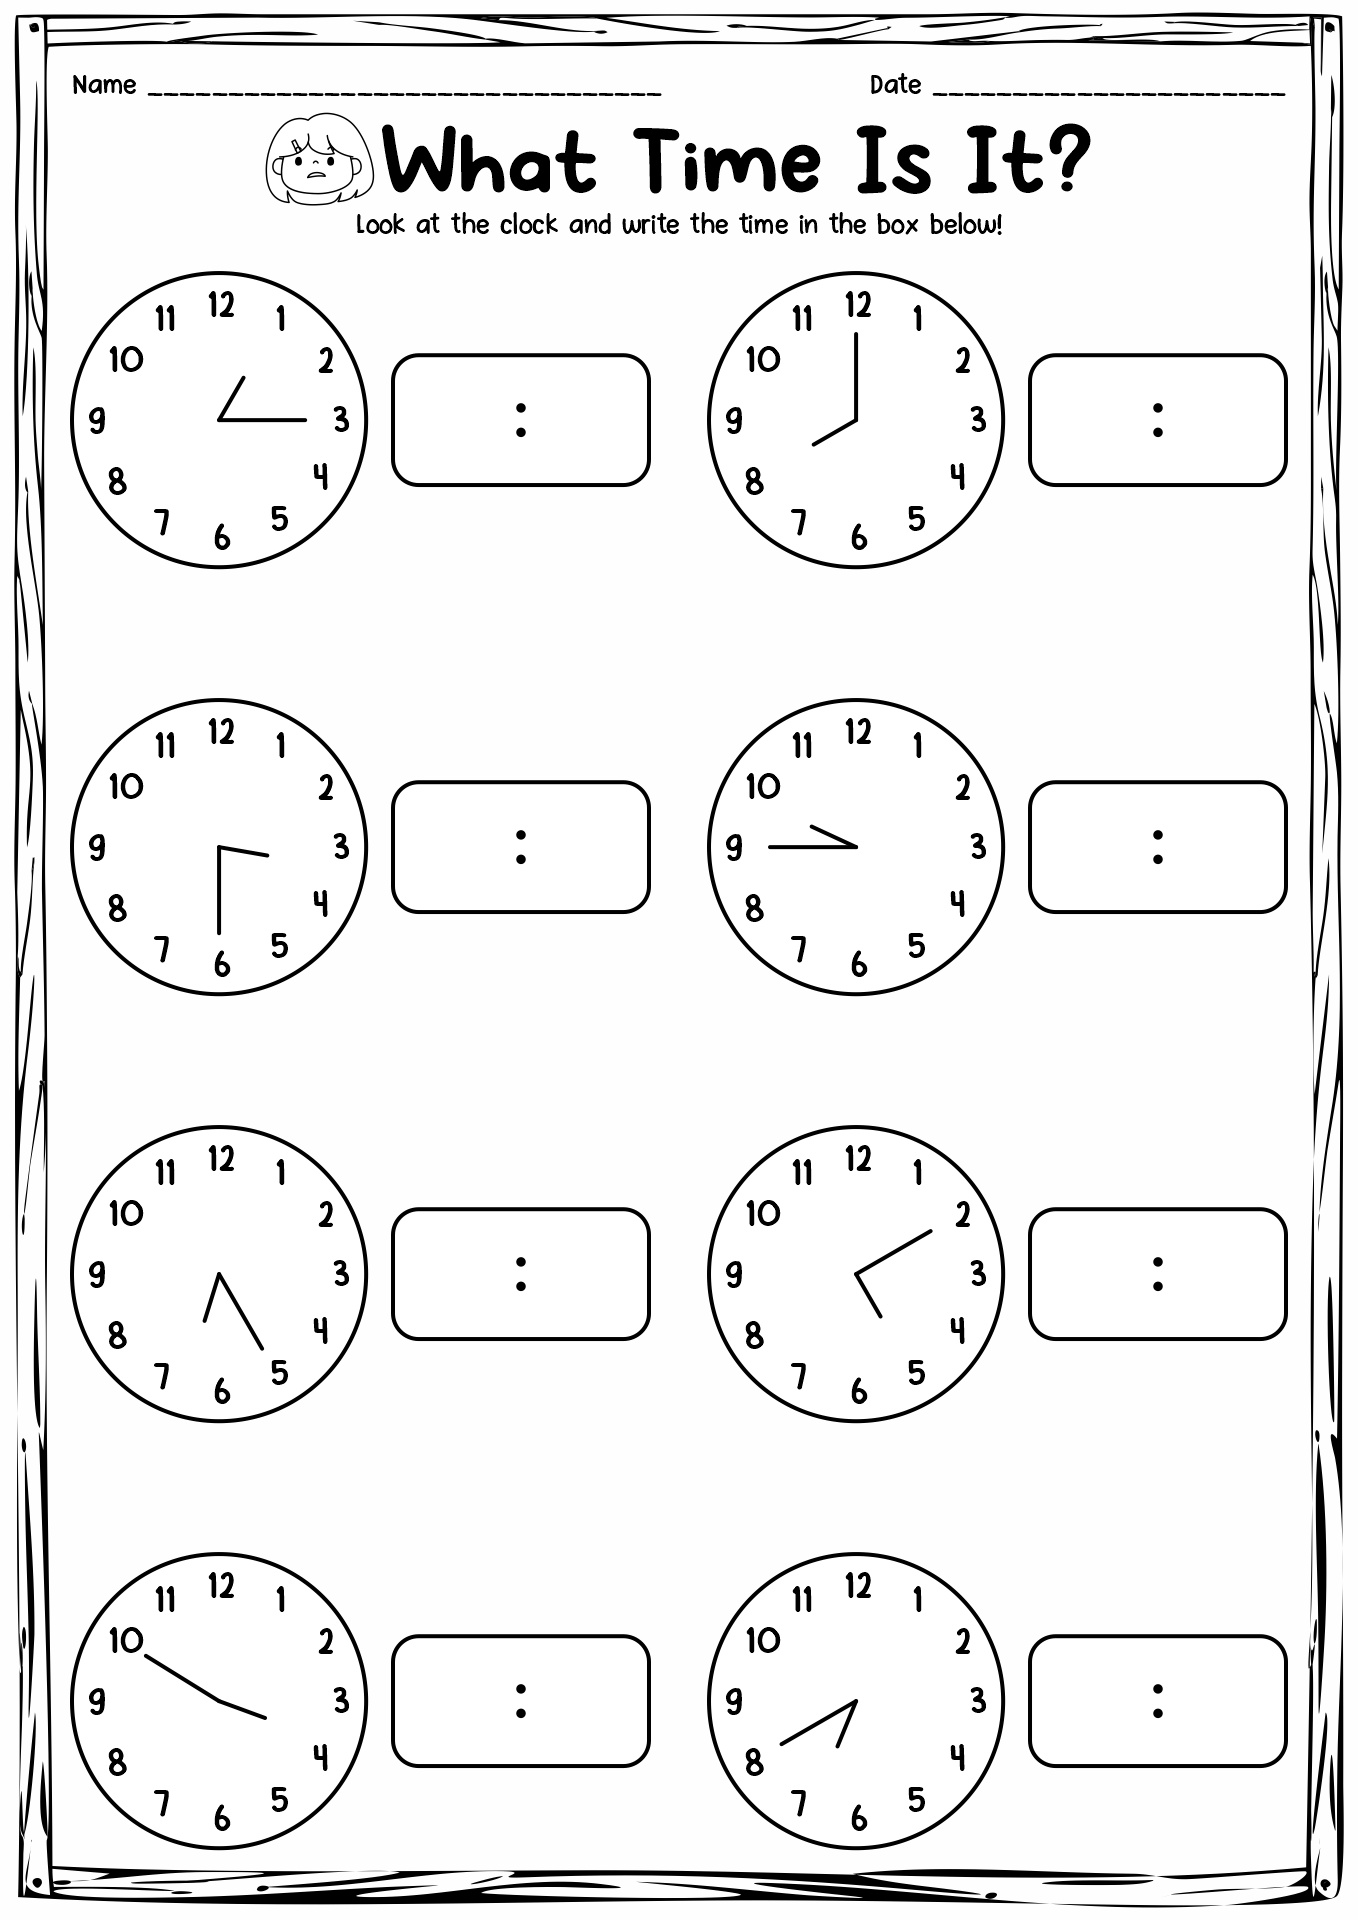 Clock Time Practice Worksheet Image